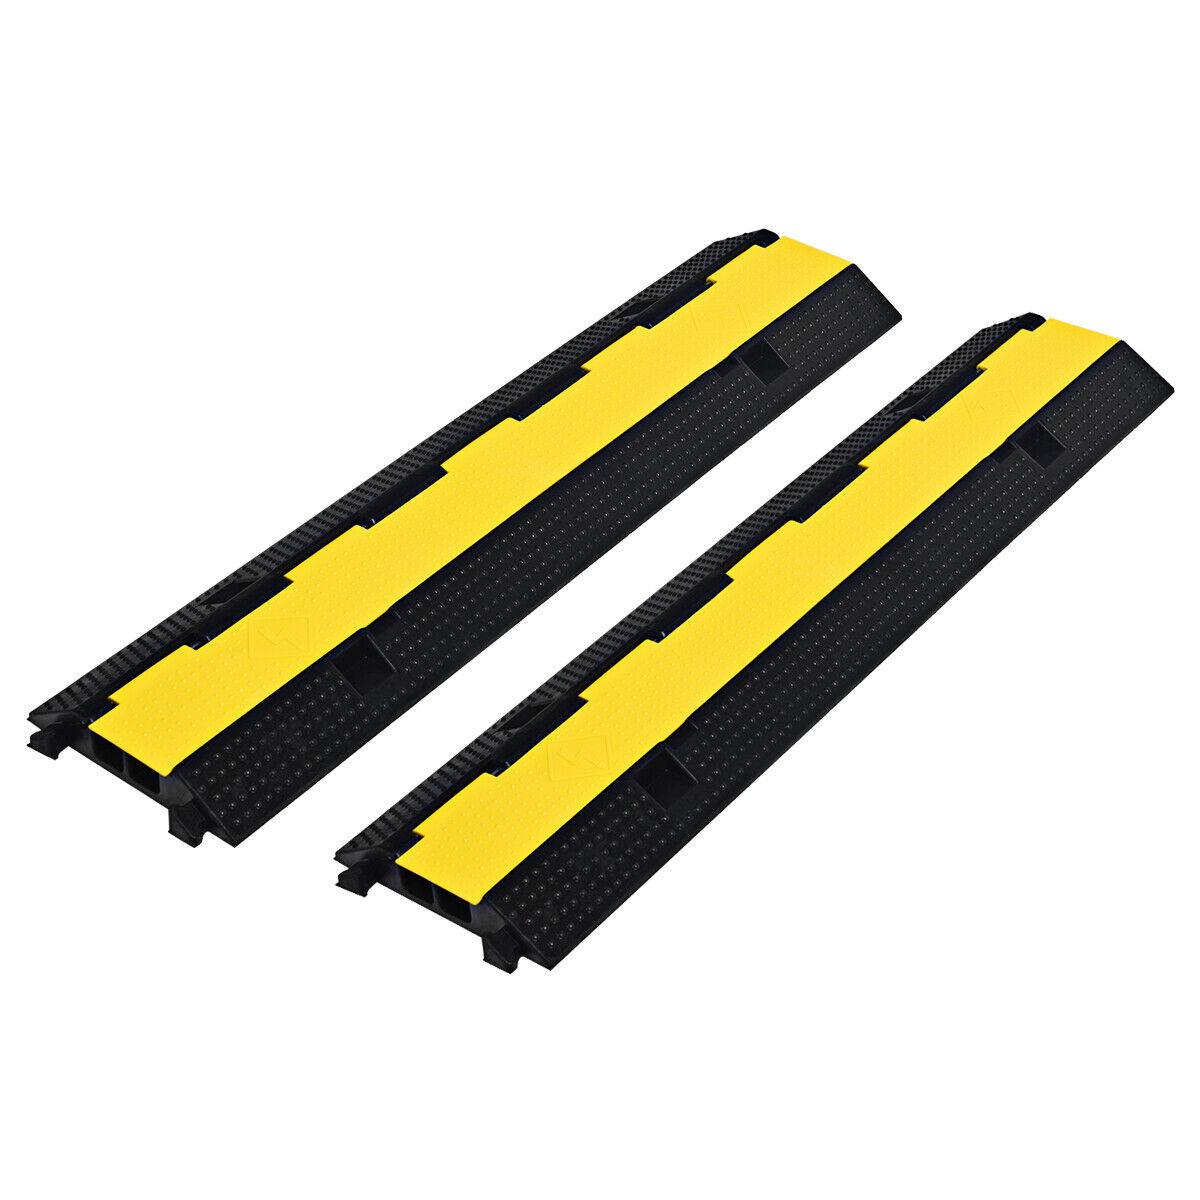 2 Pcs 2 Channel Rubber Floor Cable Protectors Traffic Bump W/flip-open Top Cover